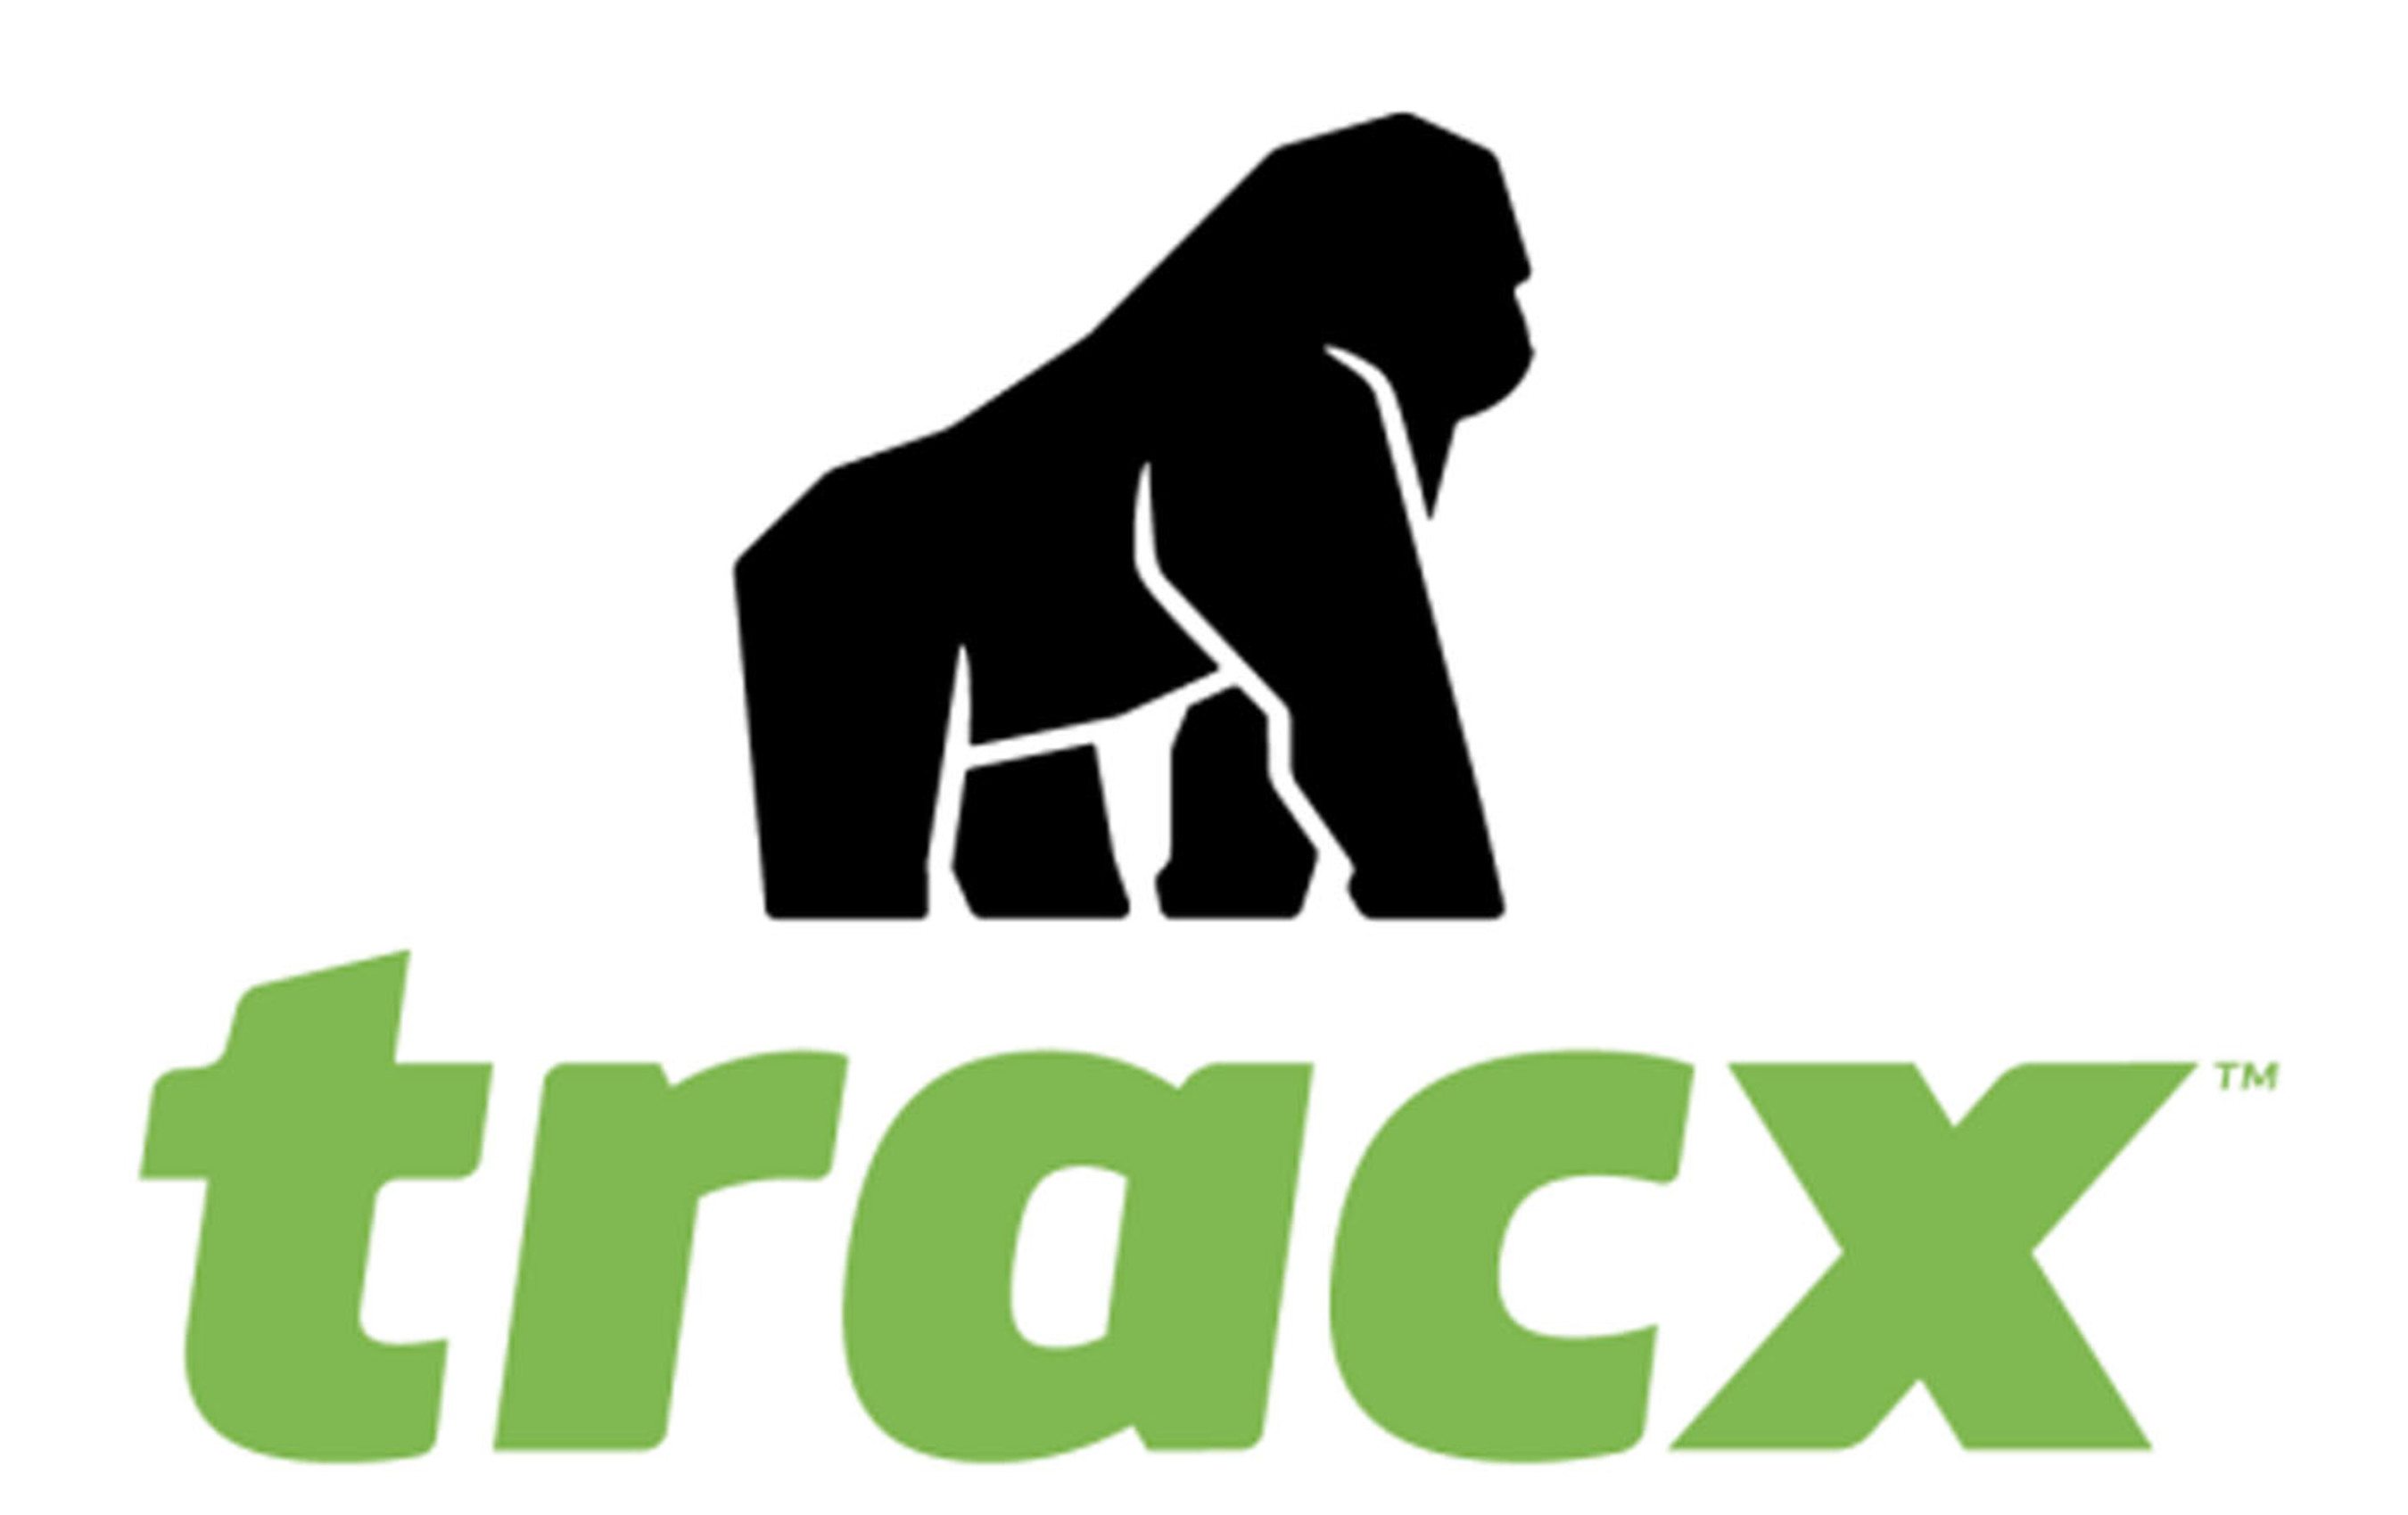 Tracx logo.